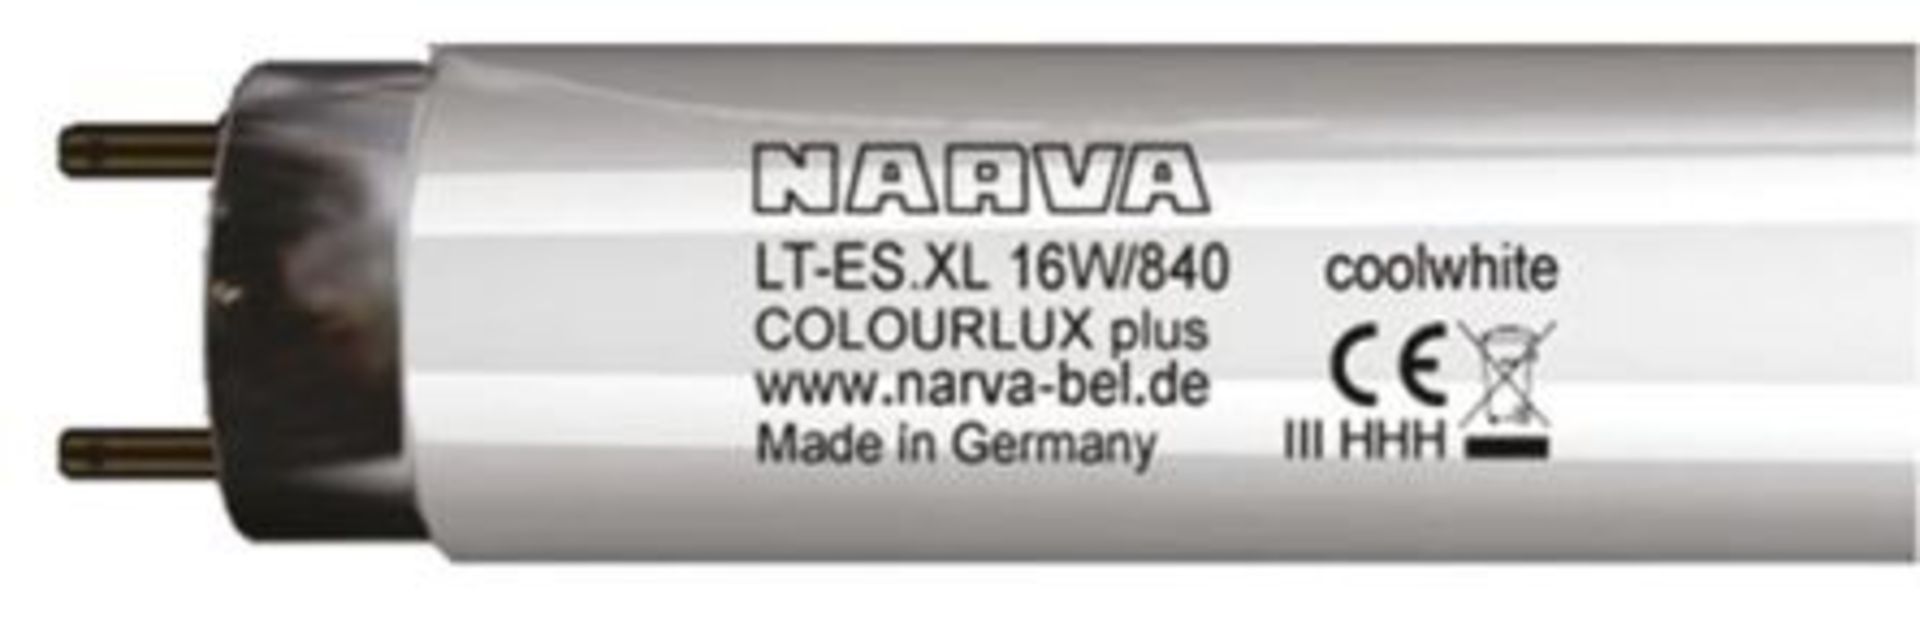 100 x Narva 51 W T8 Fluorescent Tube, 4650 lm, 1500mm 7959527